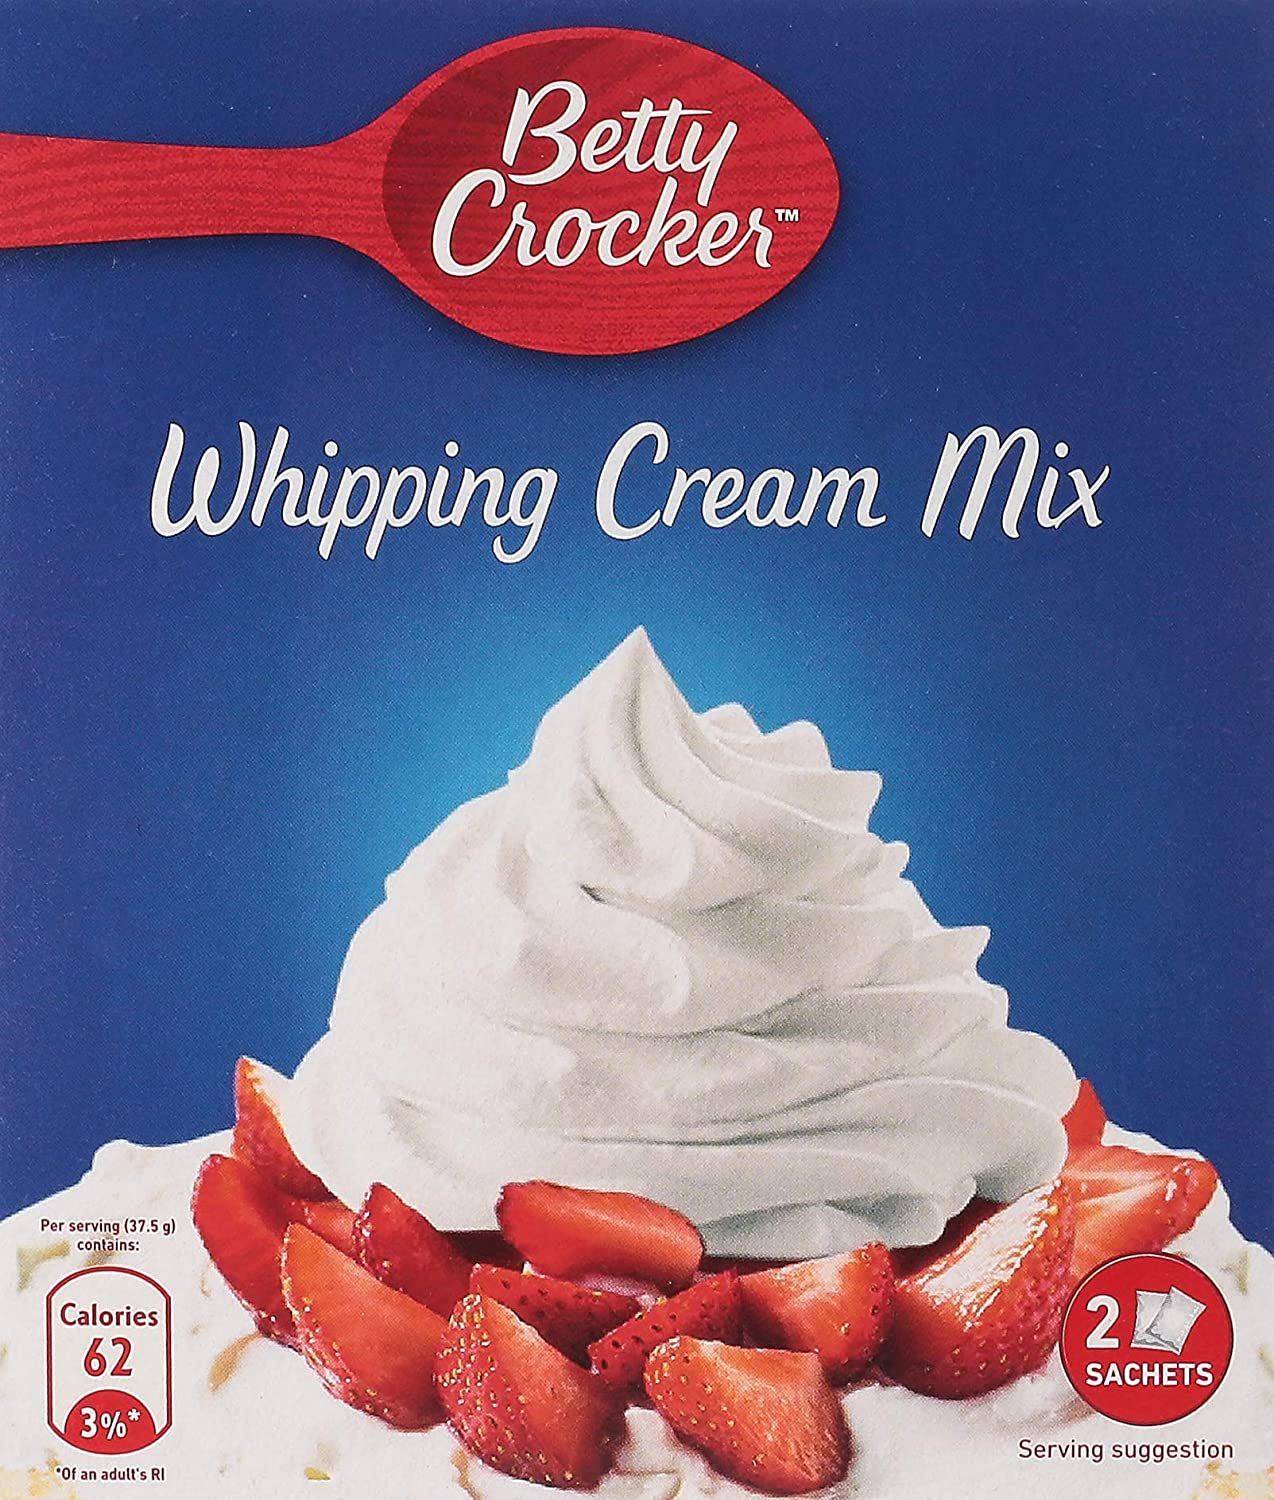 Betty Crocker Whipping Cream Mix Image